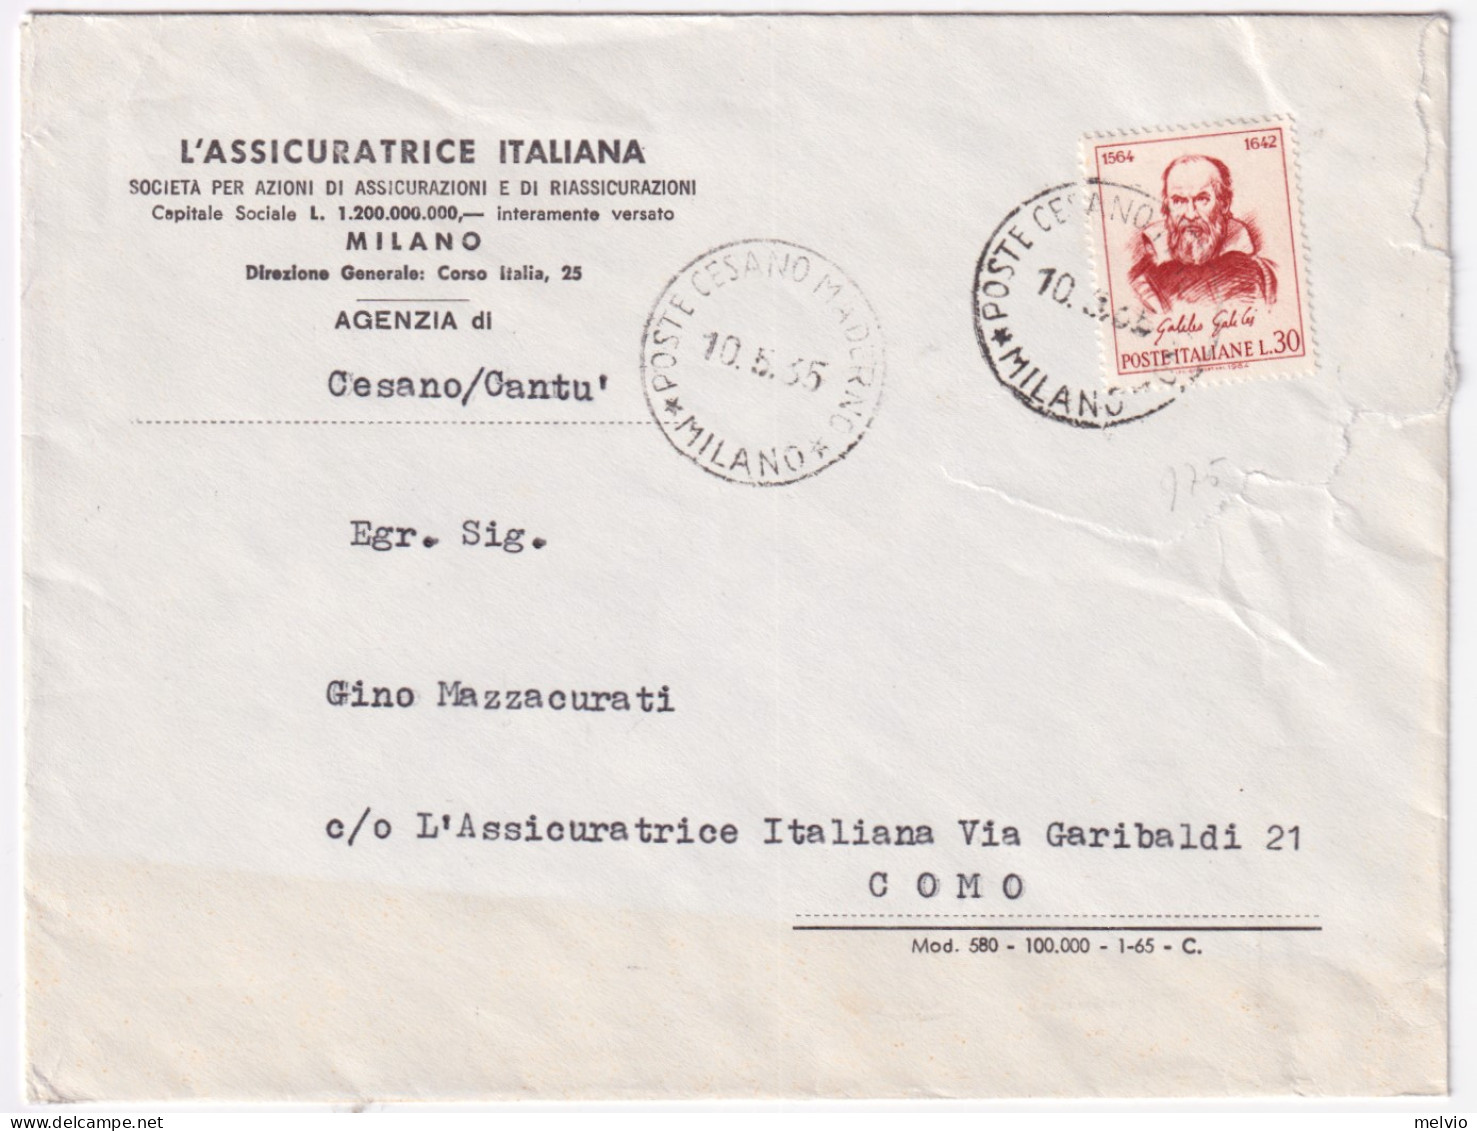 1965-G. GALILEI Lire 30 (975) Isolato Su Busta - 1961-70: Poststempel